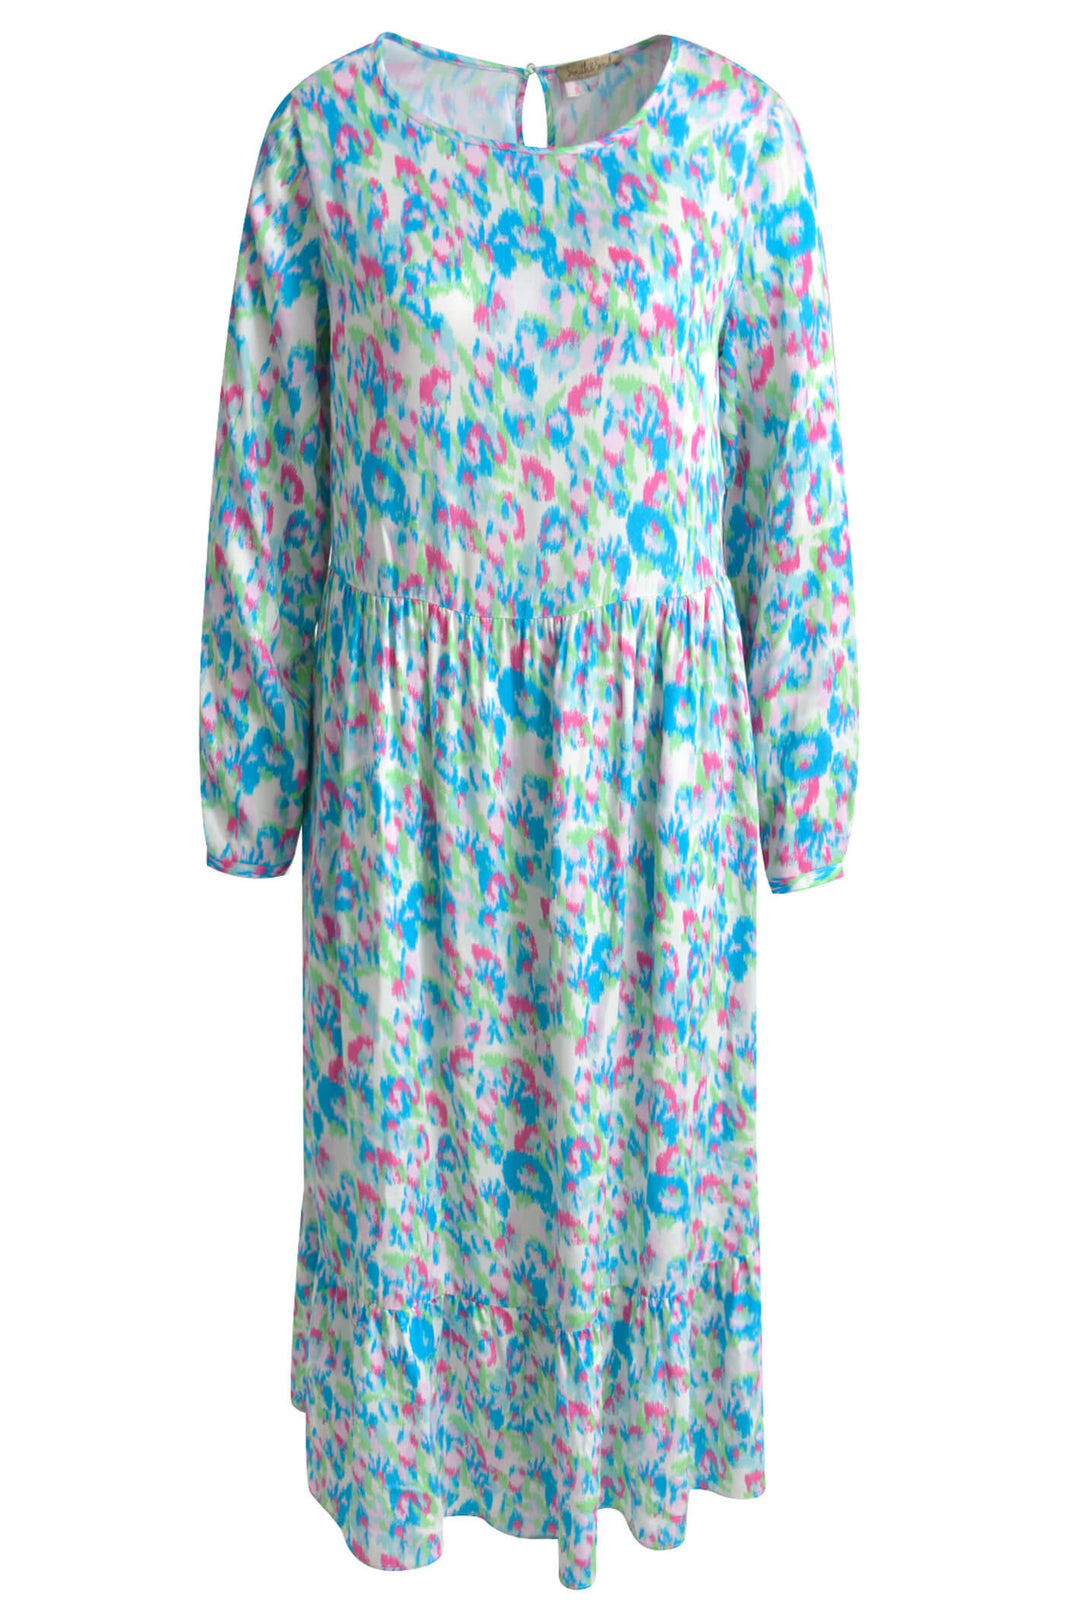 Smith & Soul 0223-0914 Sand Print Dress Multi - Shilrey Allum Boutique